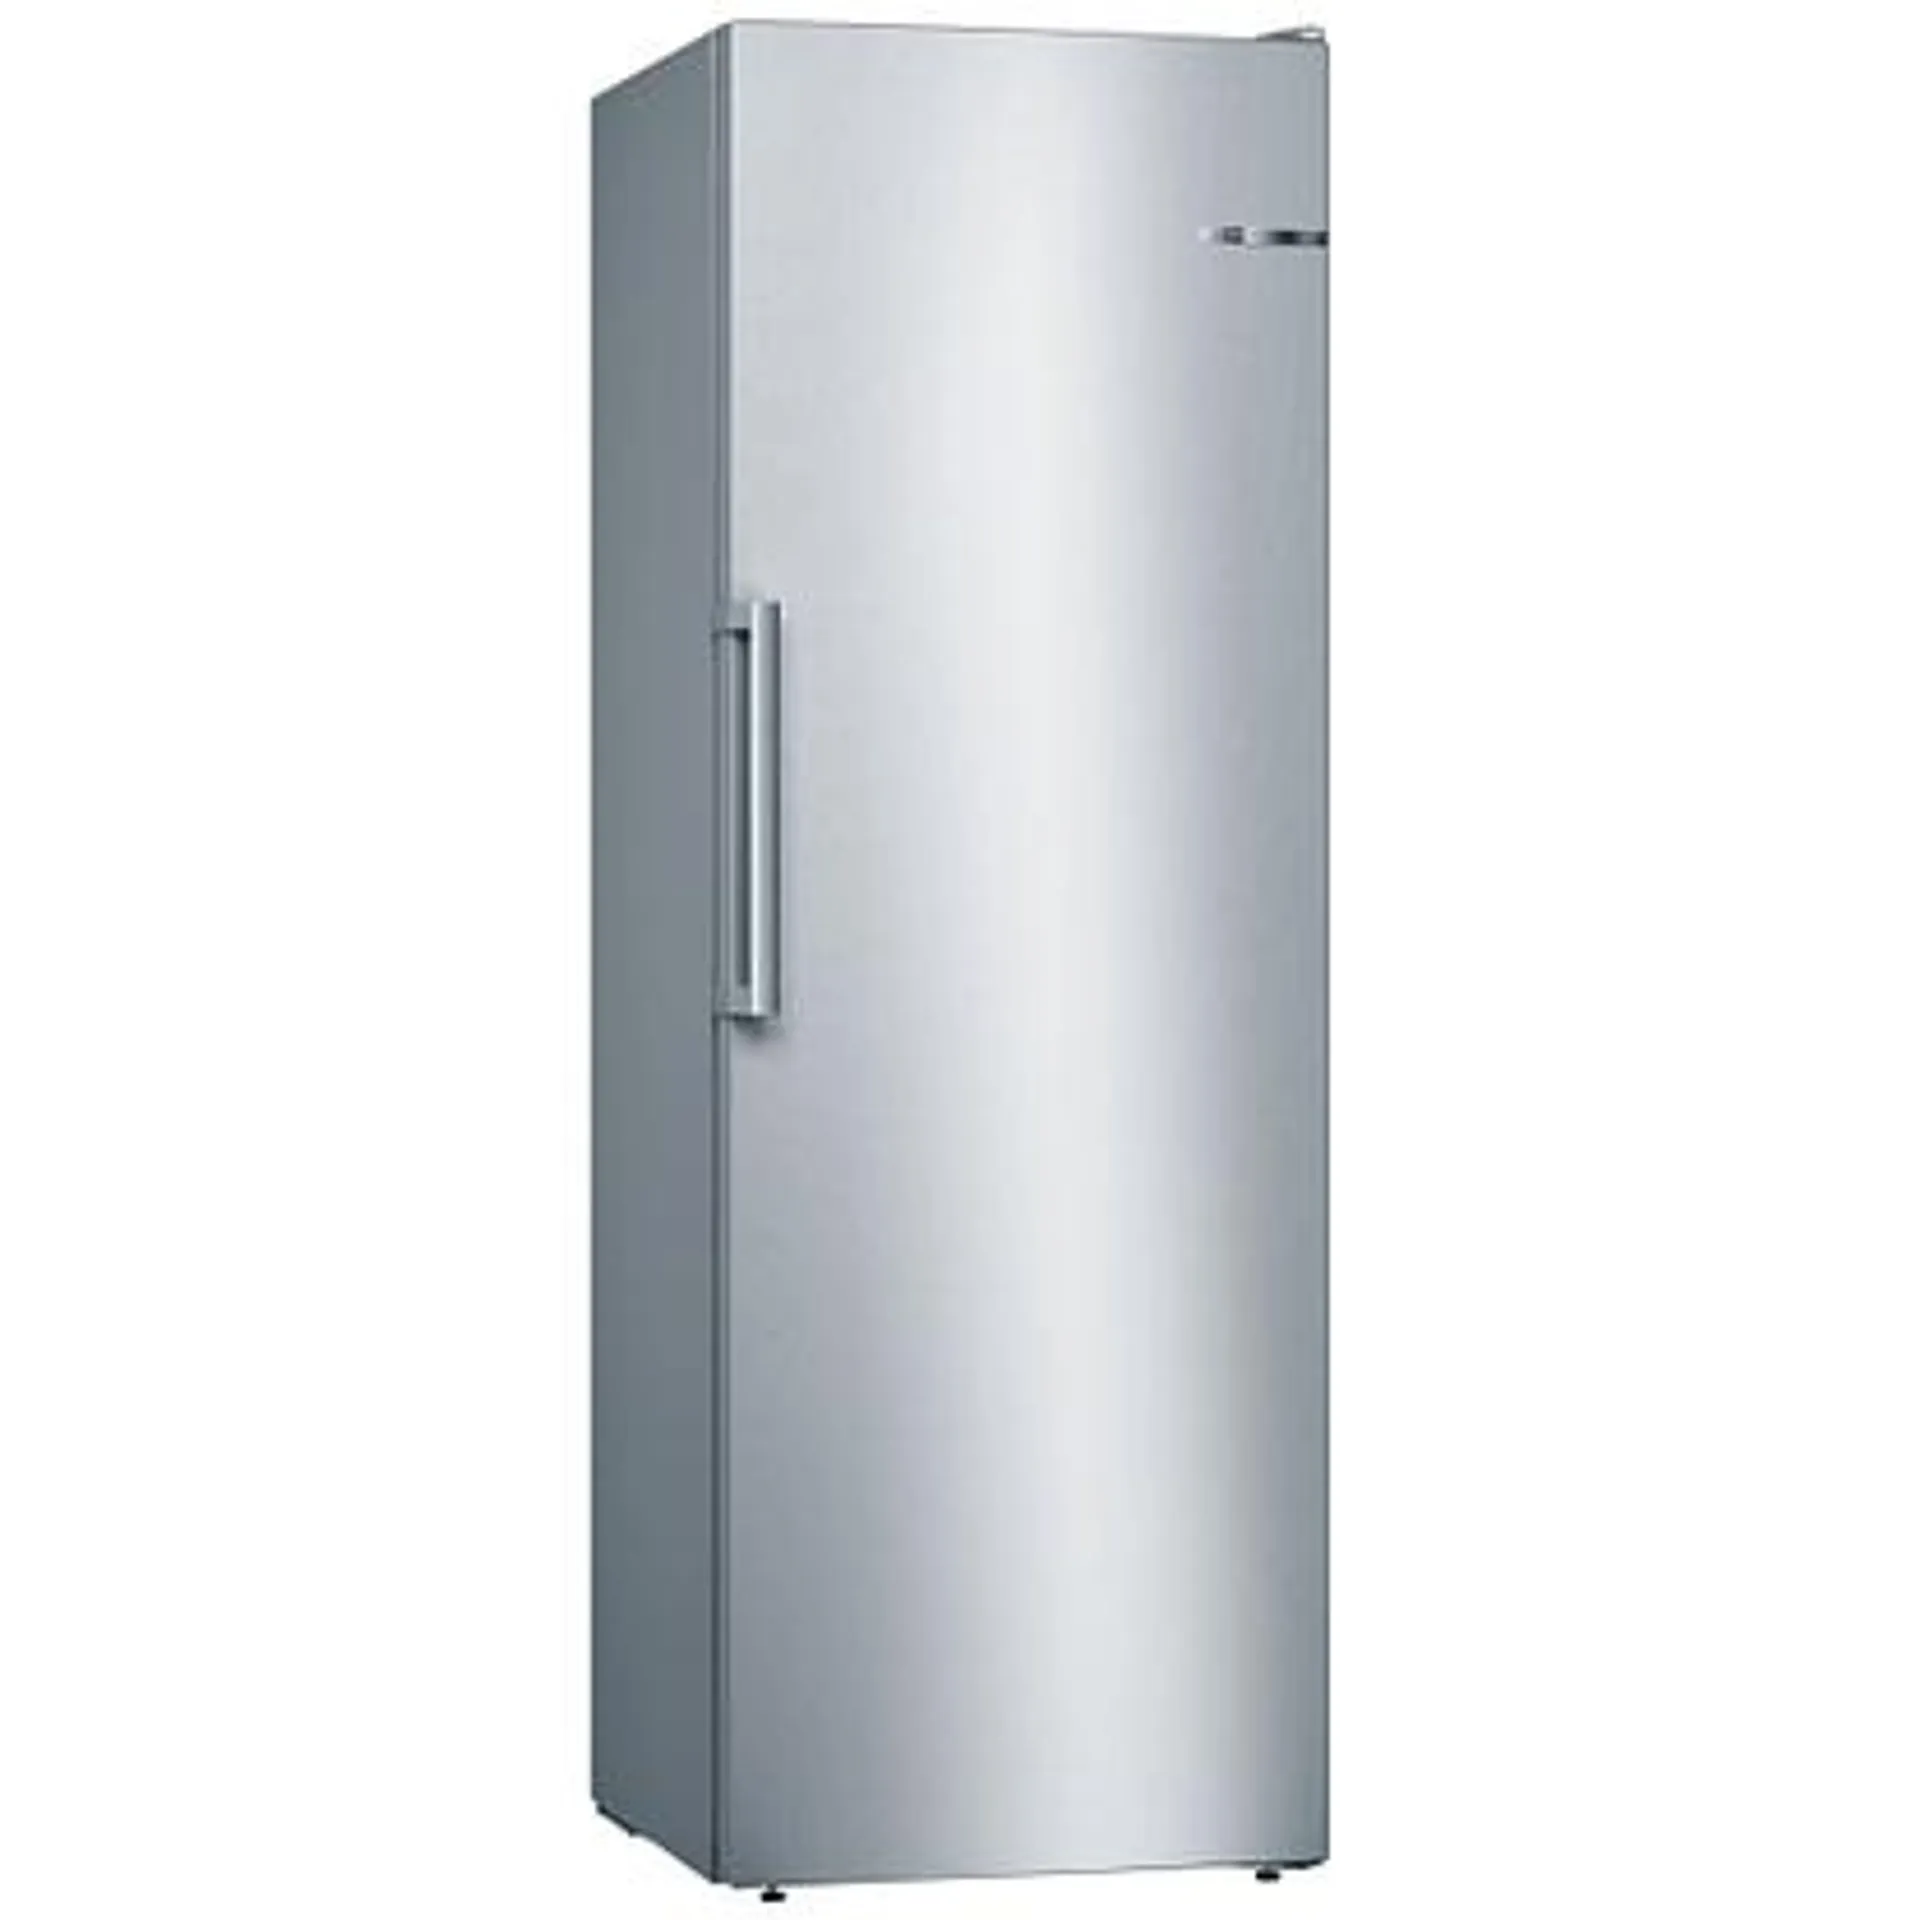 Bosch GSN33VLEPG 60cm Series 4 Freestanding Frost Free Freezer – SILVER